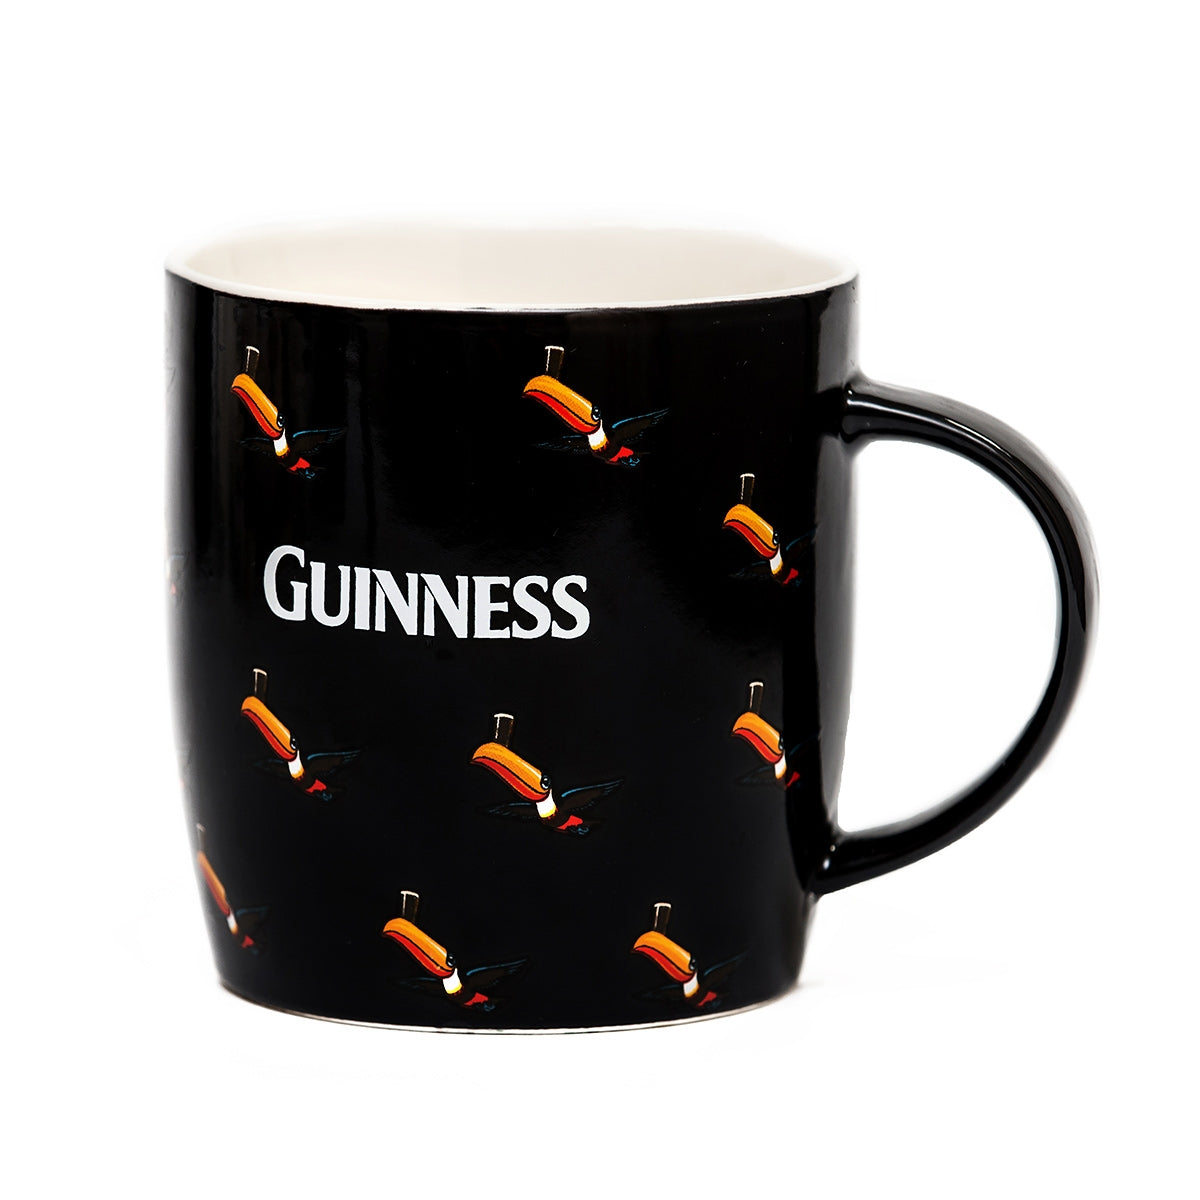 Guinness Black Mug with Multiple Flying Toucans